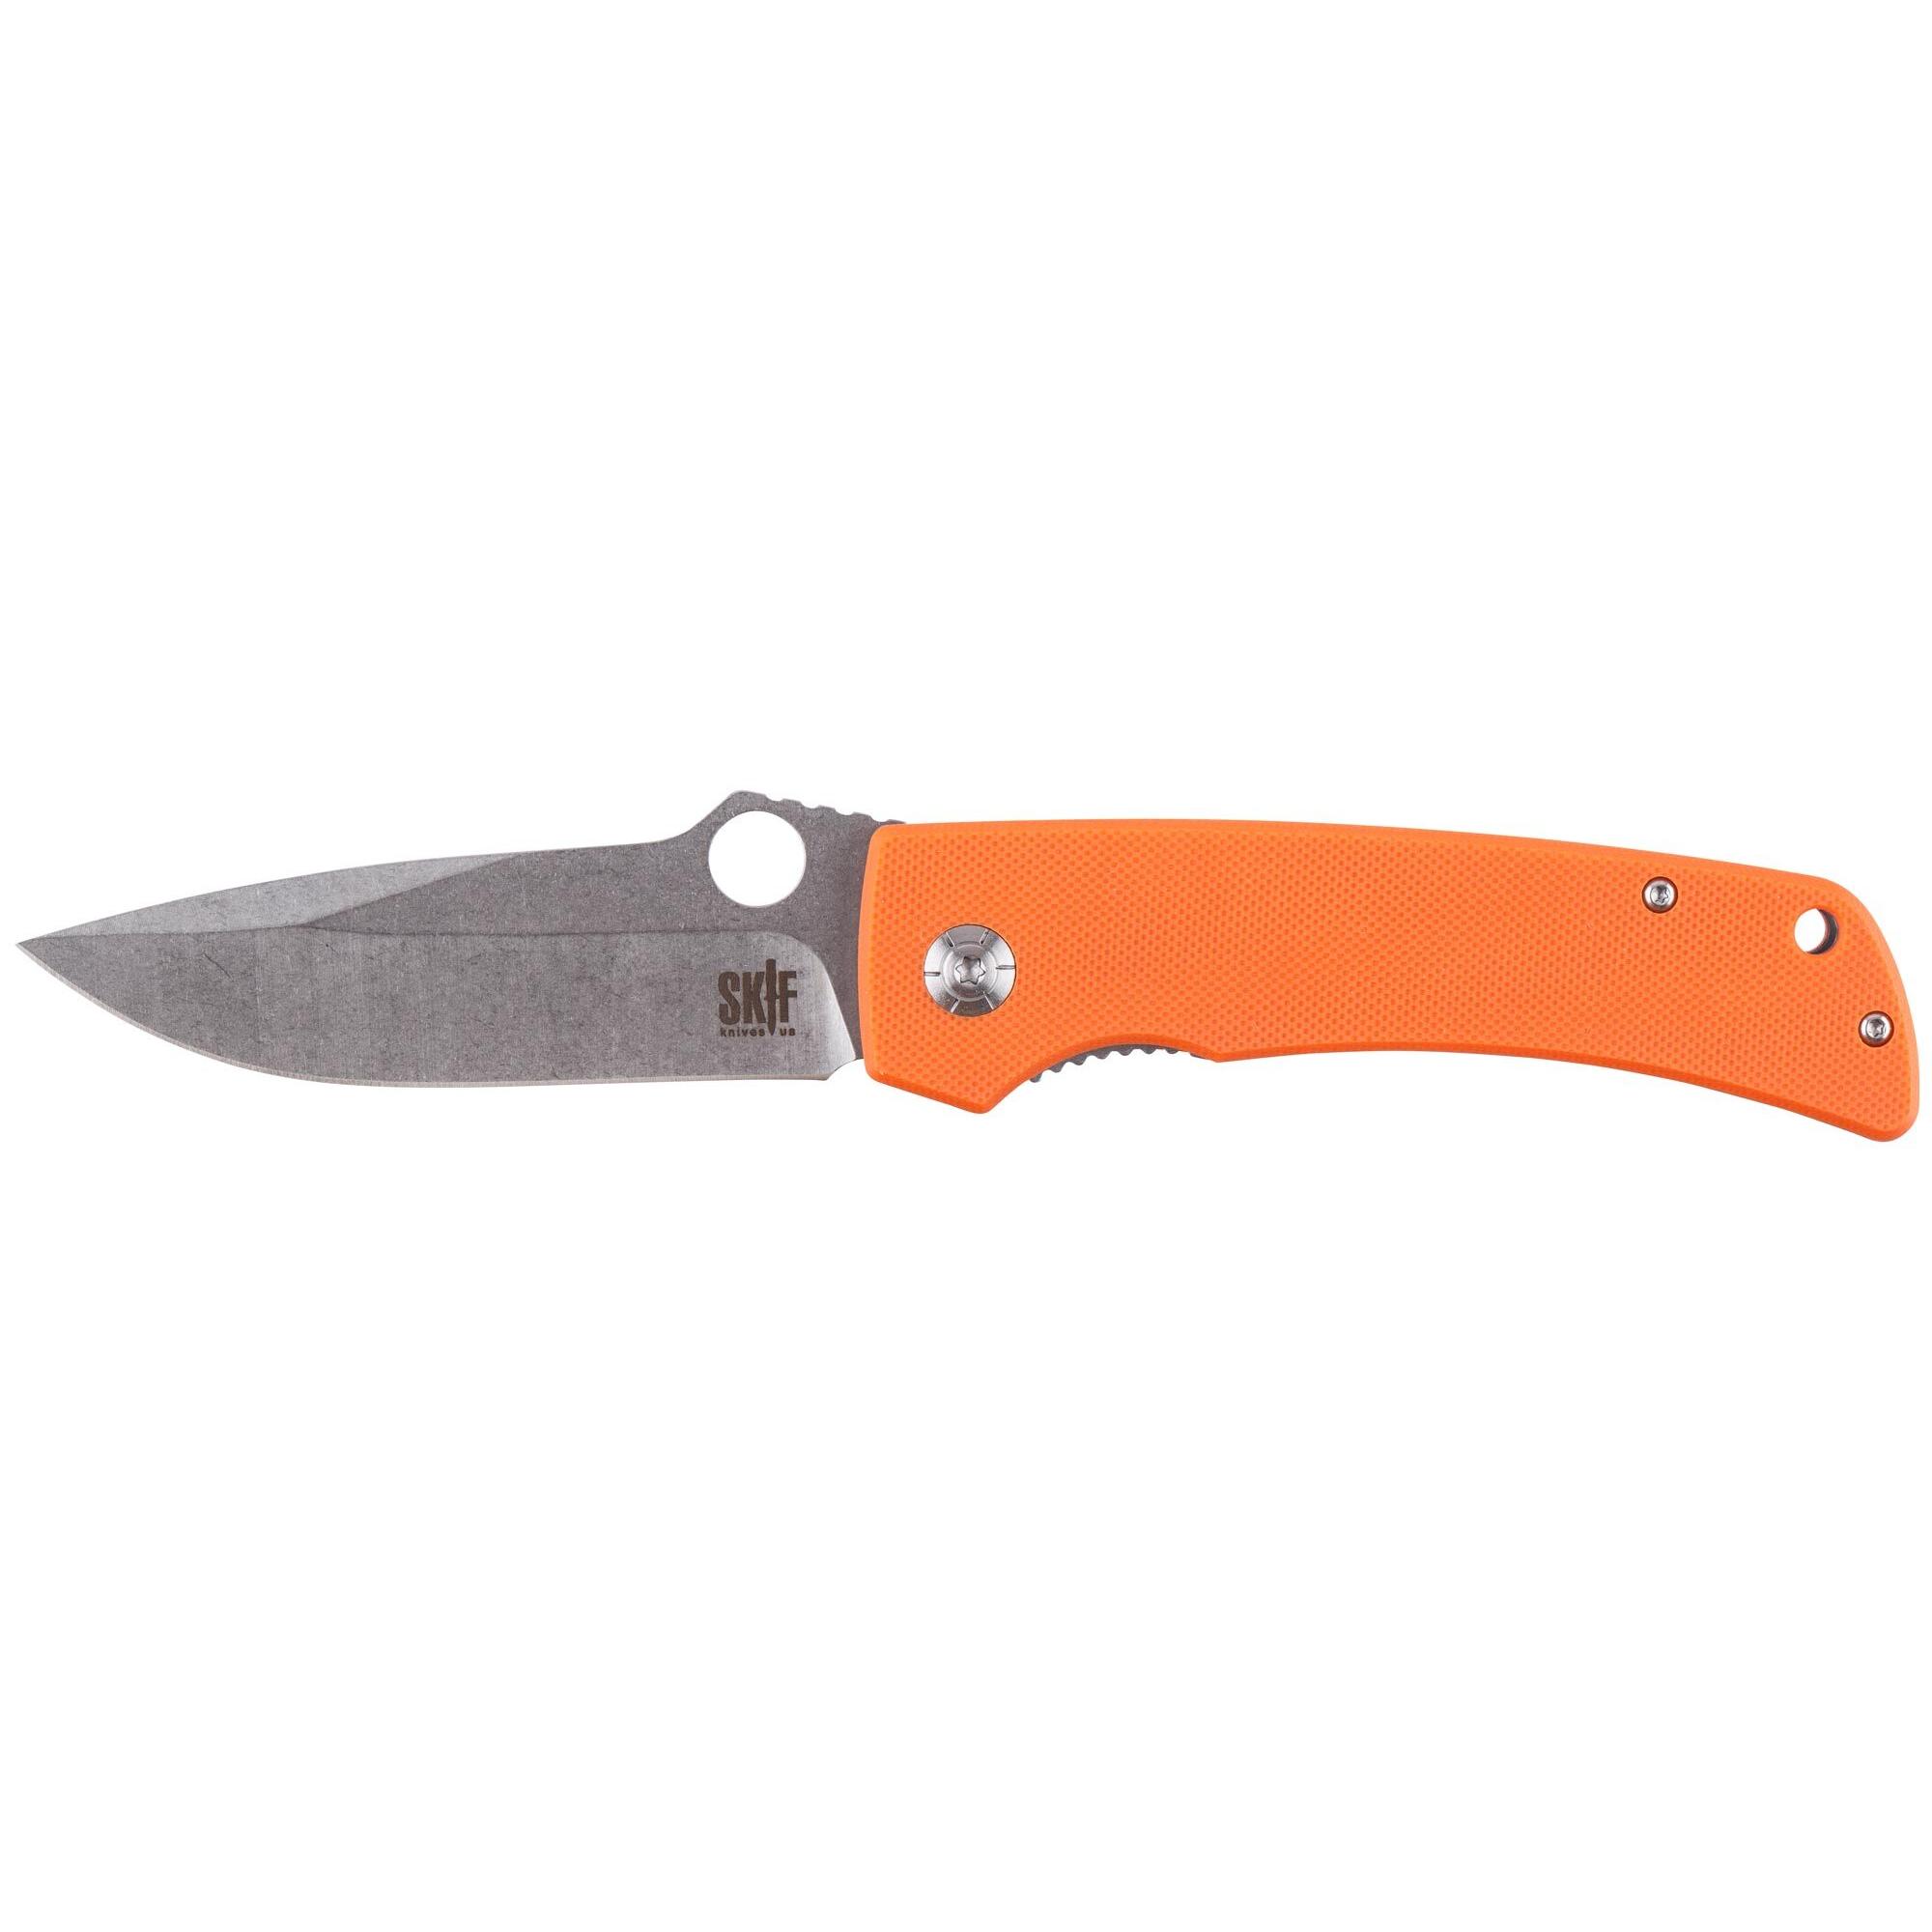 Нож Skif Hole Orange IS-007OR 1765.02.27